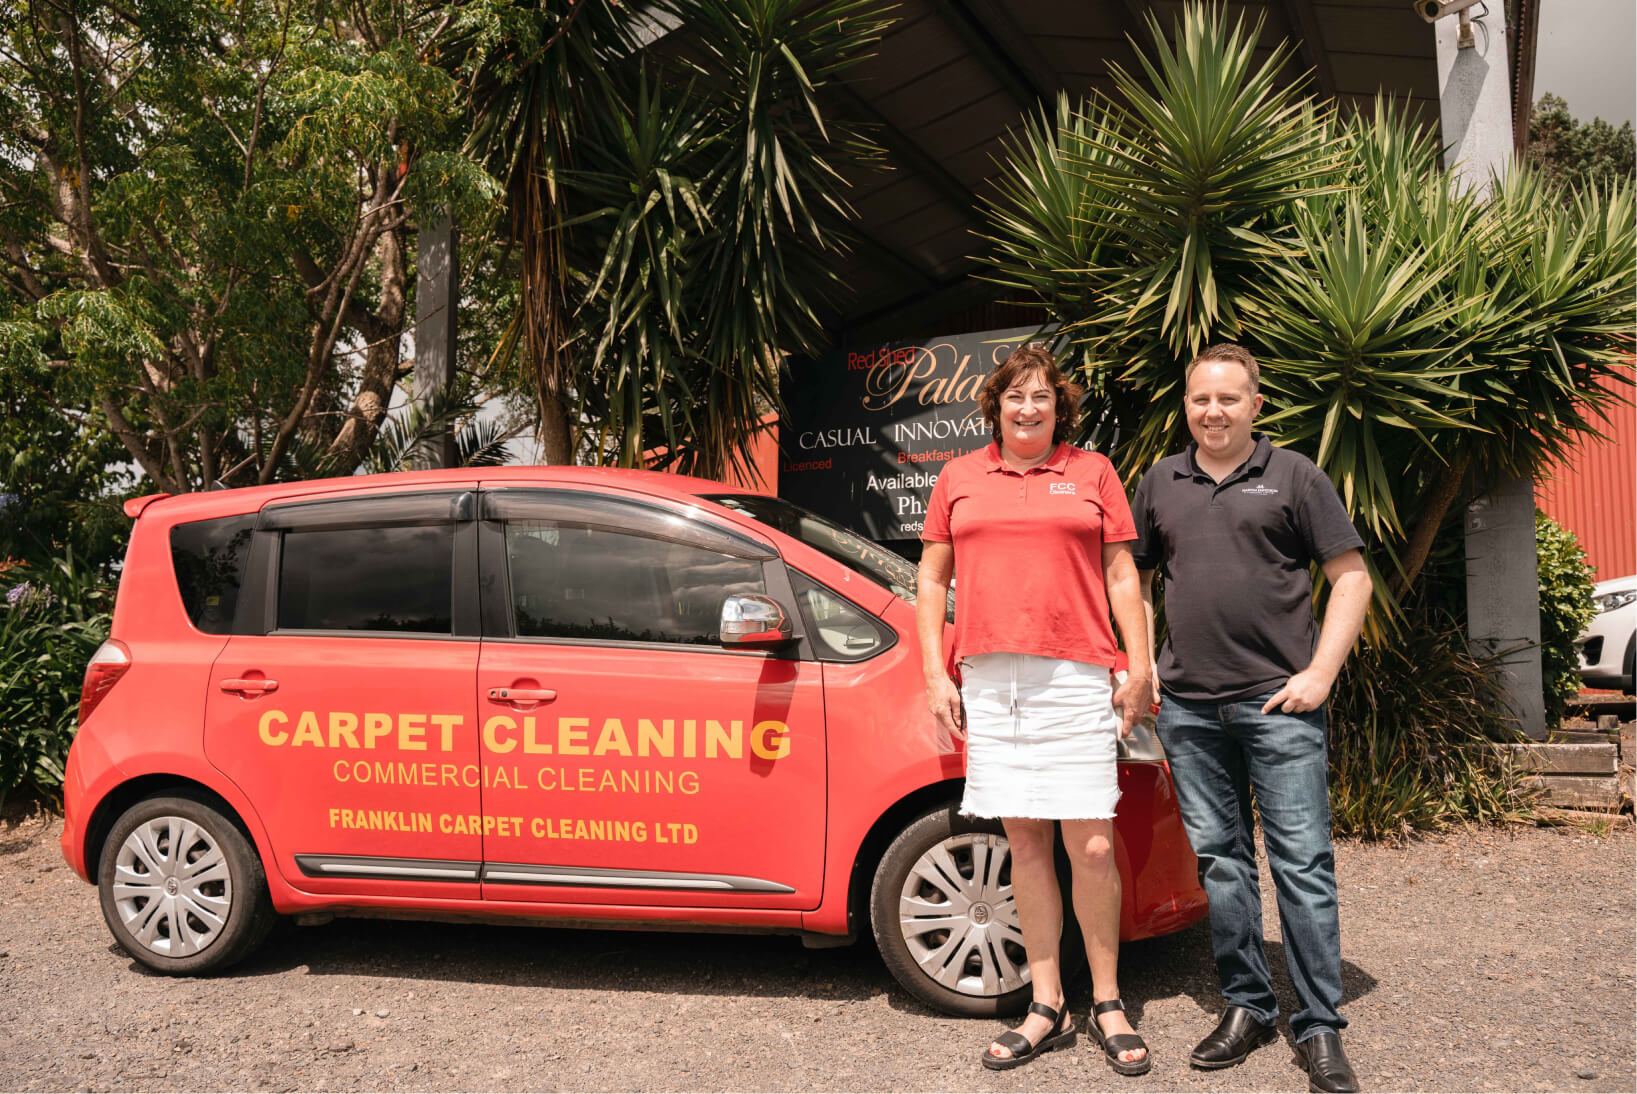 Franklin Carpet Cleaning Ltd